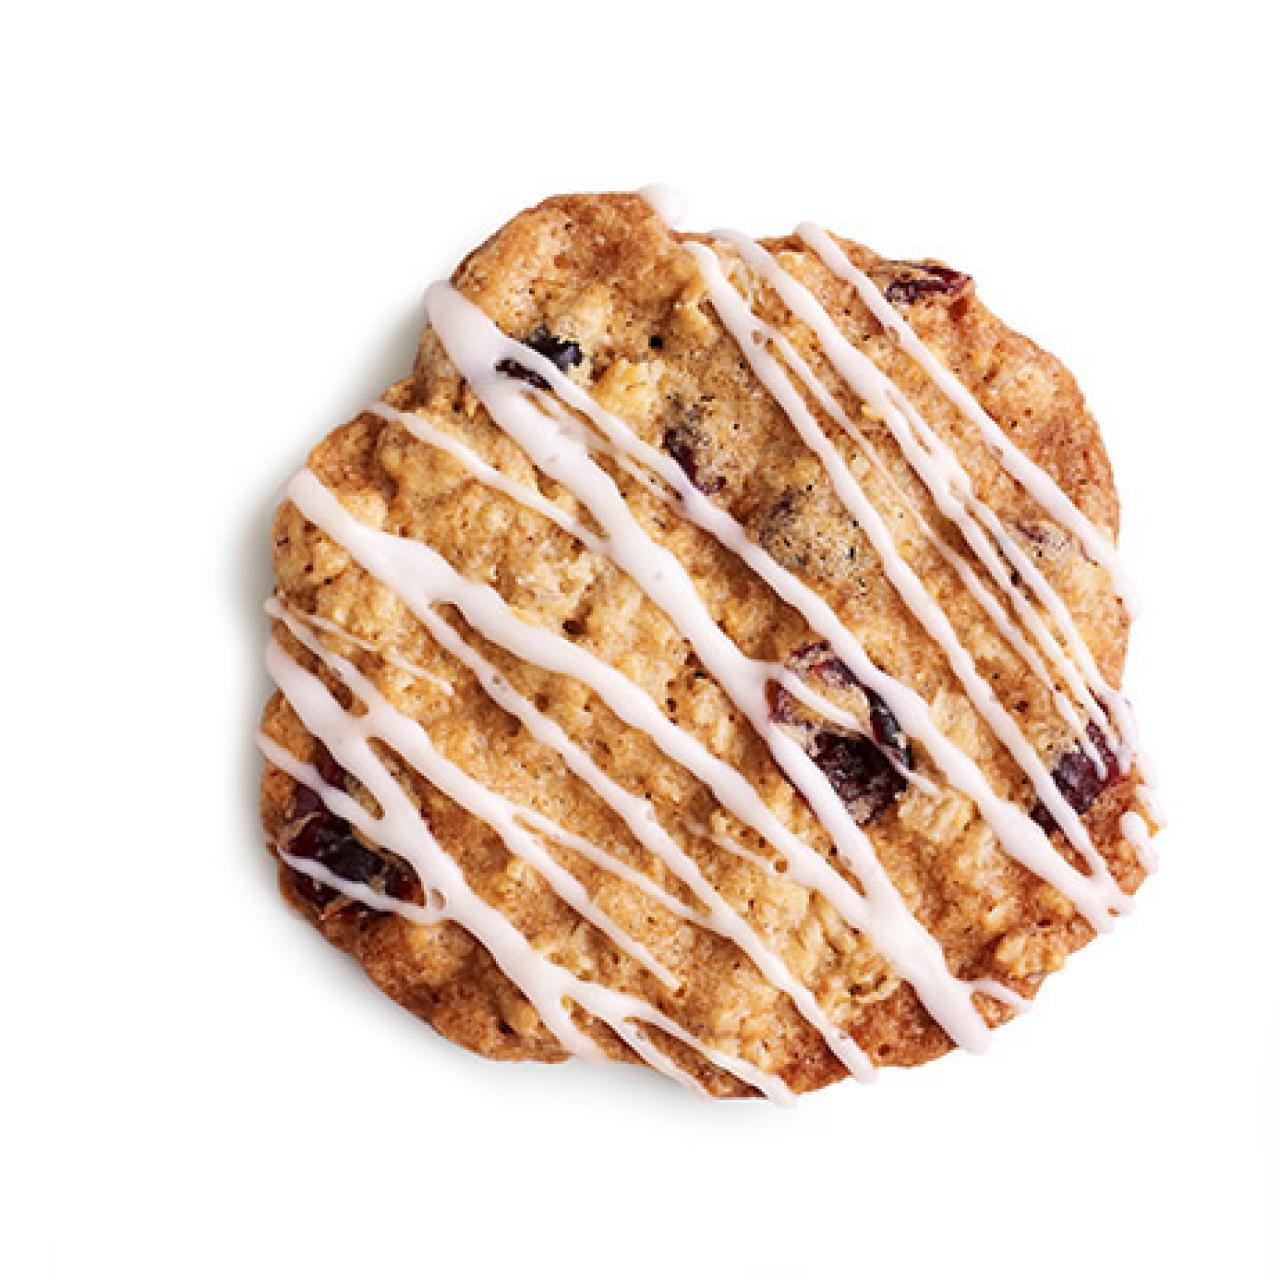 Tupperware U.S. & Canada - Share sweet treats. 󾌫 Cranberry-Chocolate  Oatmeal Cookie recipe: bit.ly/F_CcOc